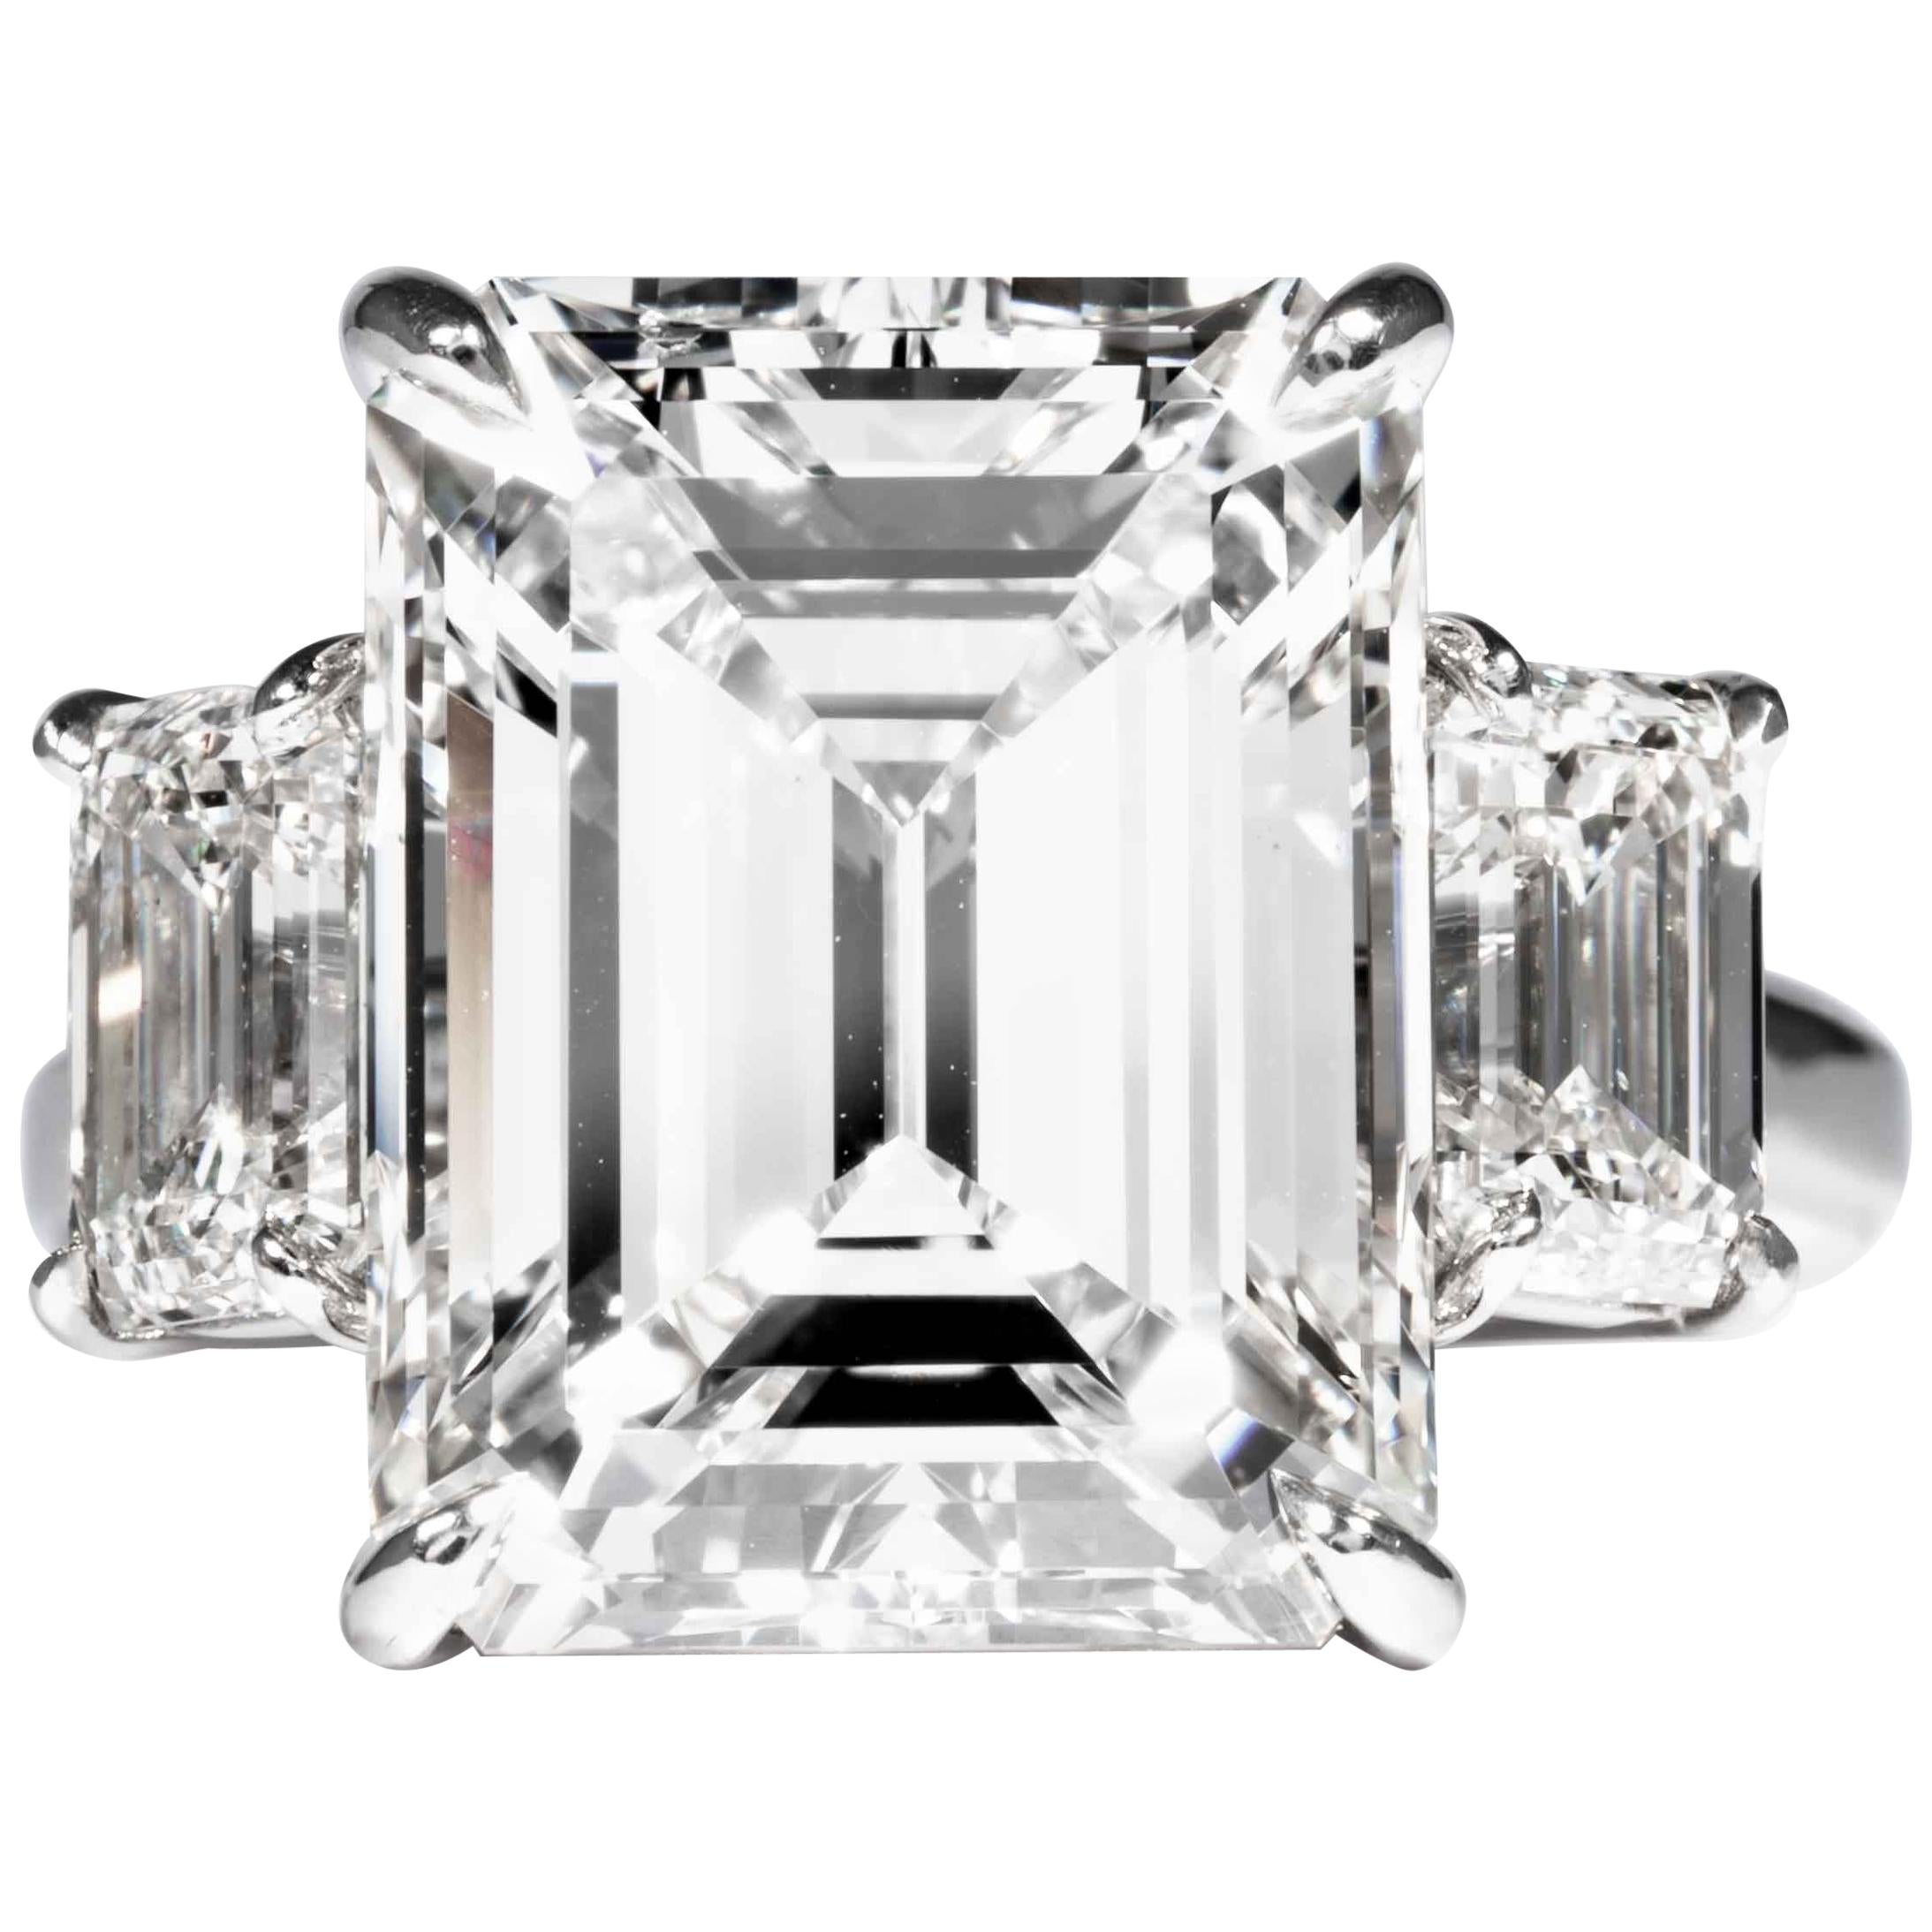 Shreve, Crump & Low GIA Certified 10.75 Carat K VS2 Emerald Cut Diamond Ring